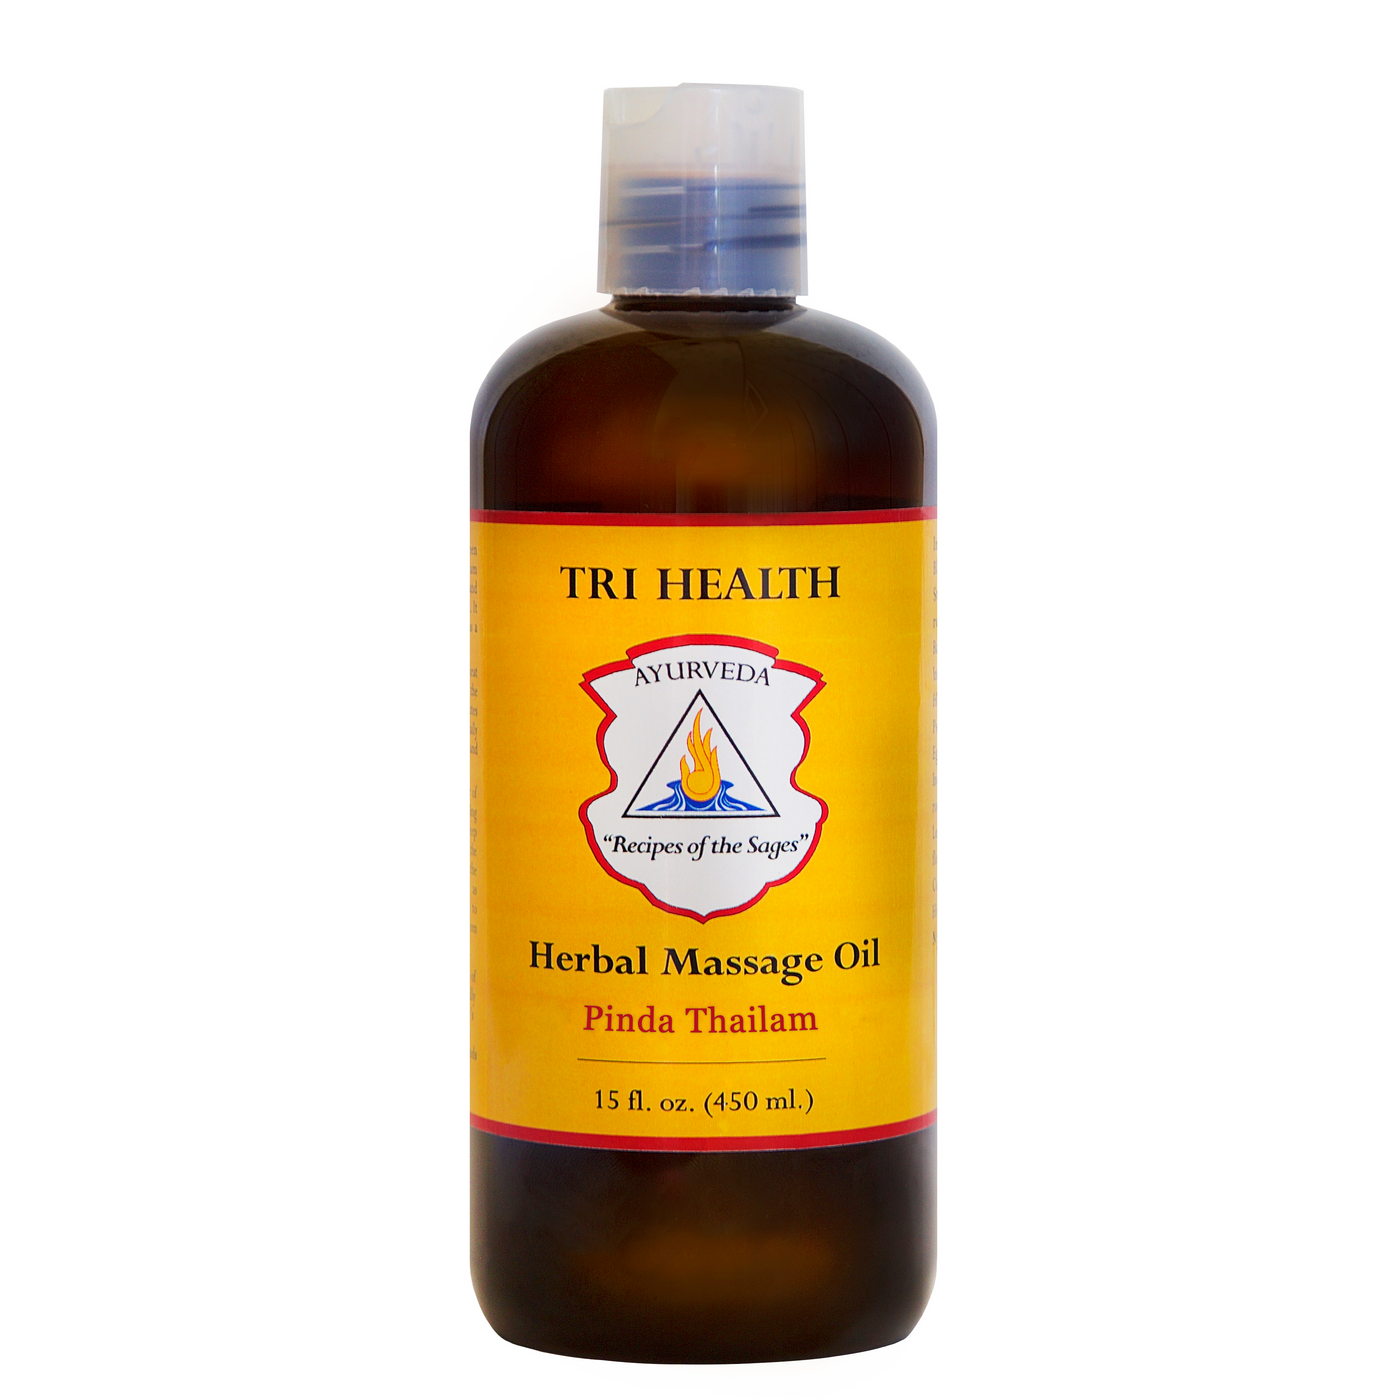 Pinda Thailam - Healthy Joints TriHealth Ayurveda